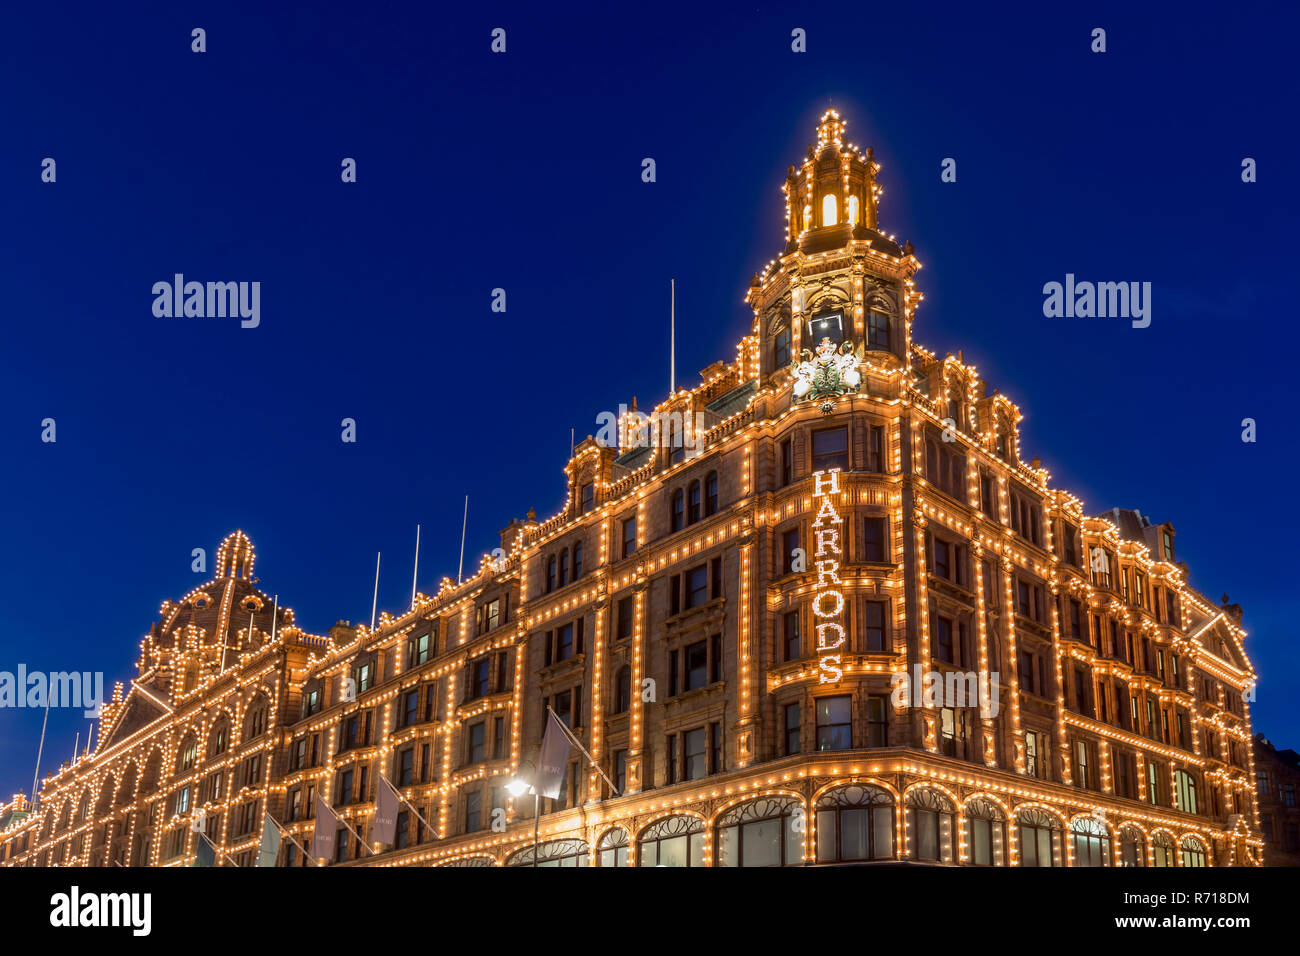 Illuminated department store Harrods, night scene, London, Great Britain Stock Photo